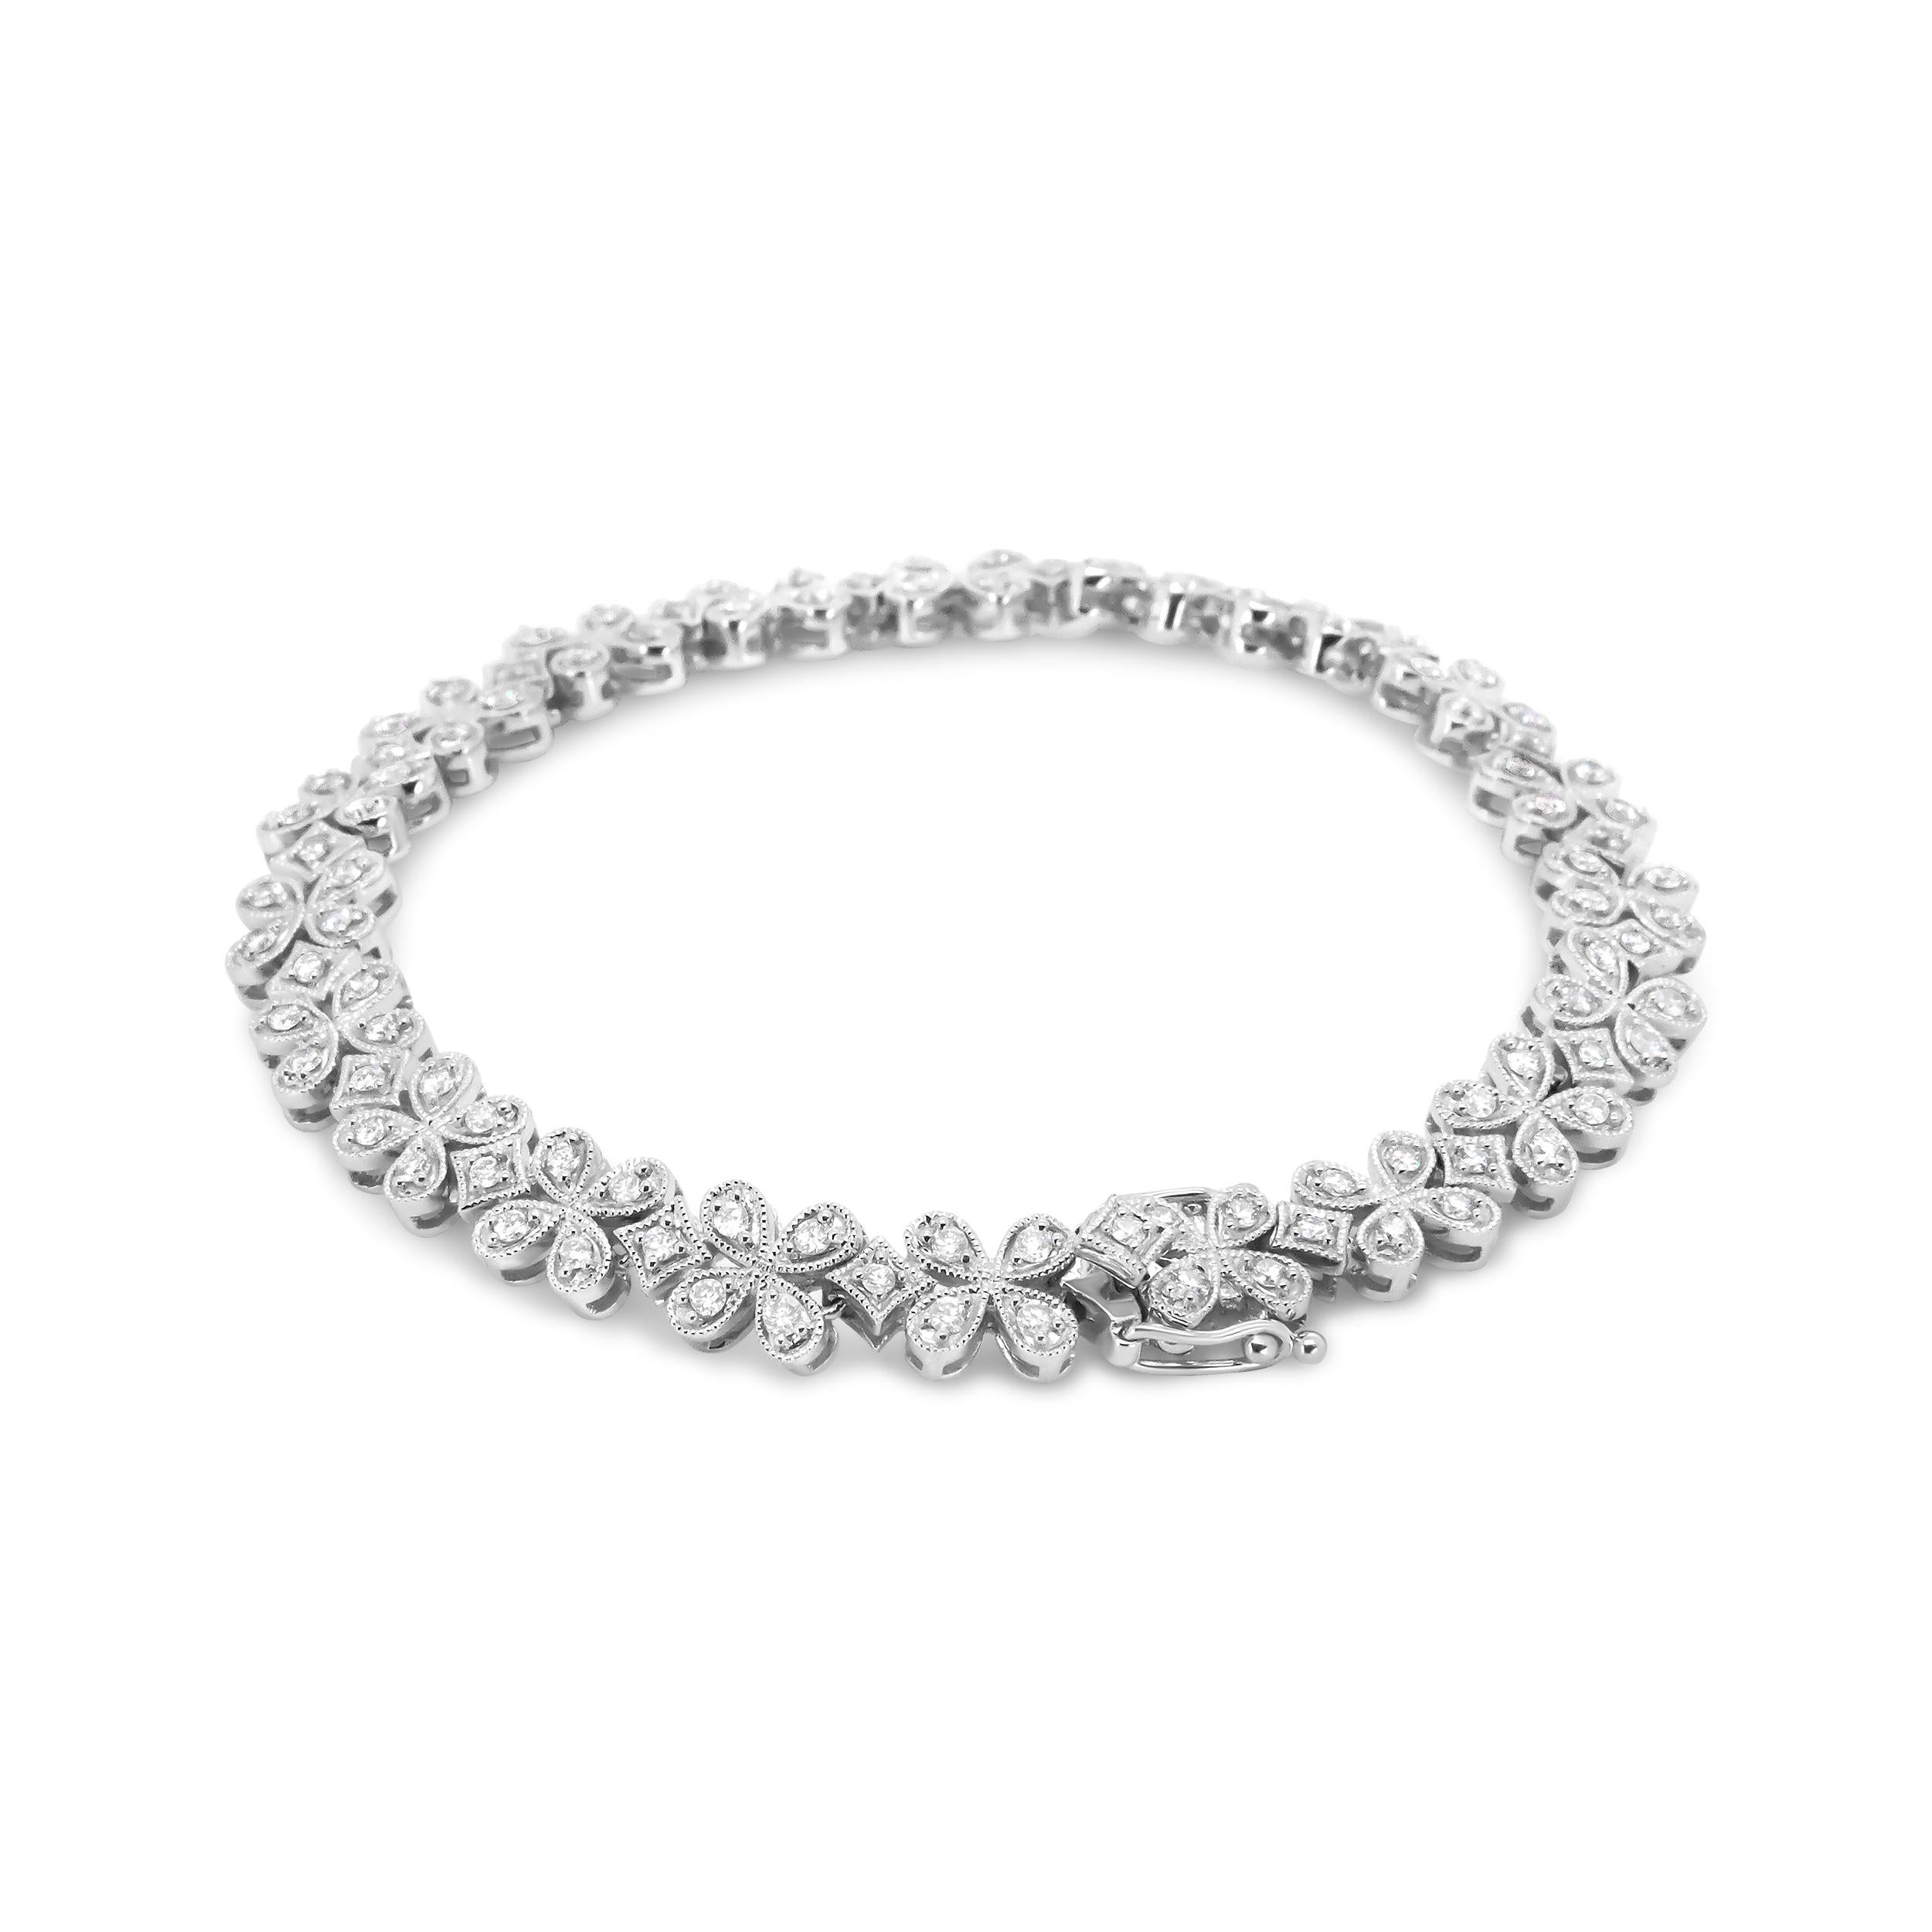 Contemporary 14K White Gold 1 1/2 Carat Round Diamond Floral Clover-Shaped Link Bracelet